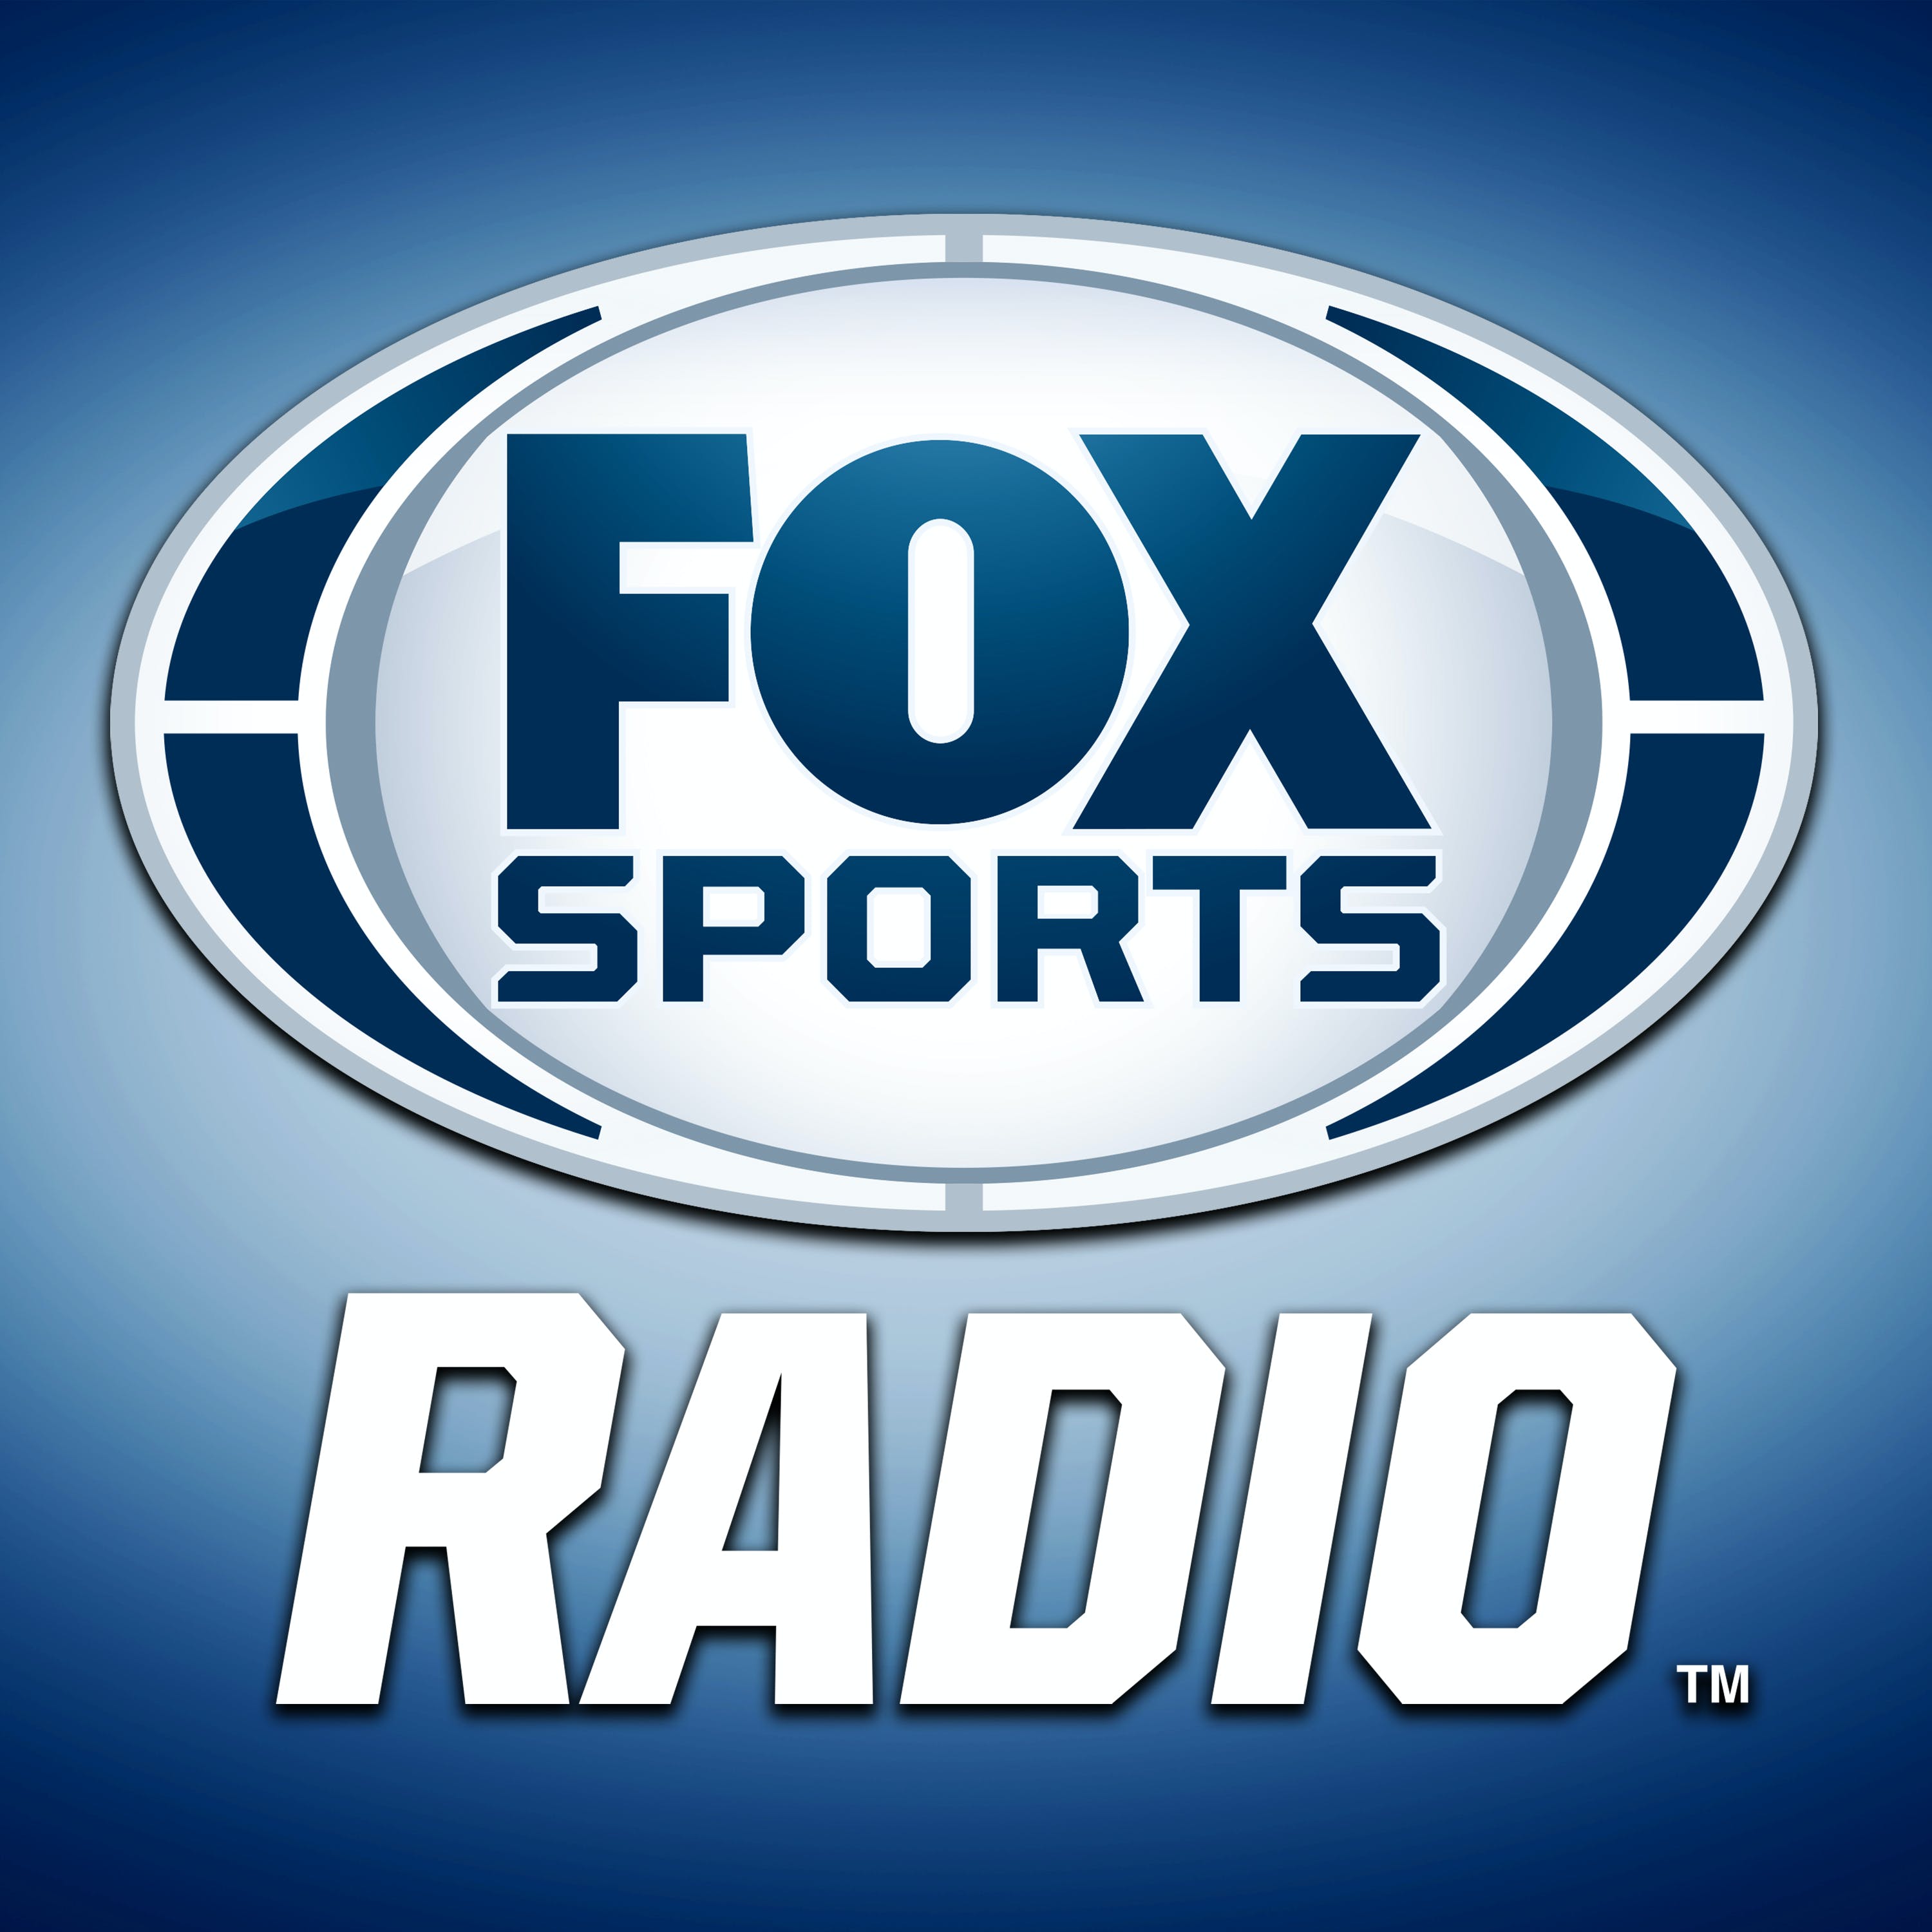 05/22/2021 - FOX Sports Saturday with Brian Noe and Ephraim Salaam